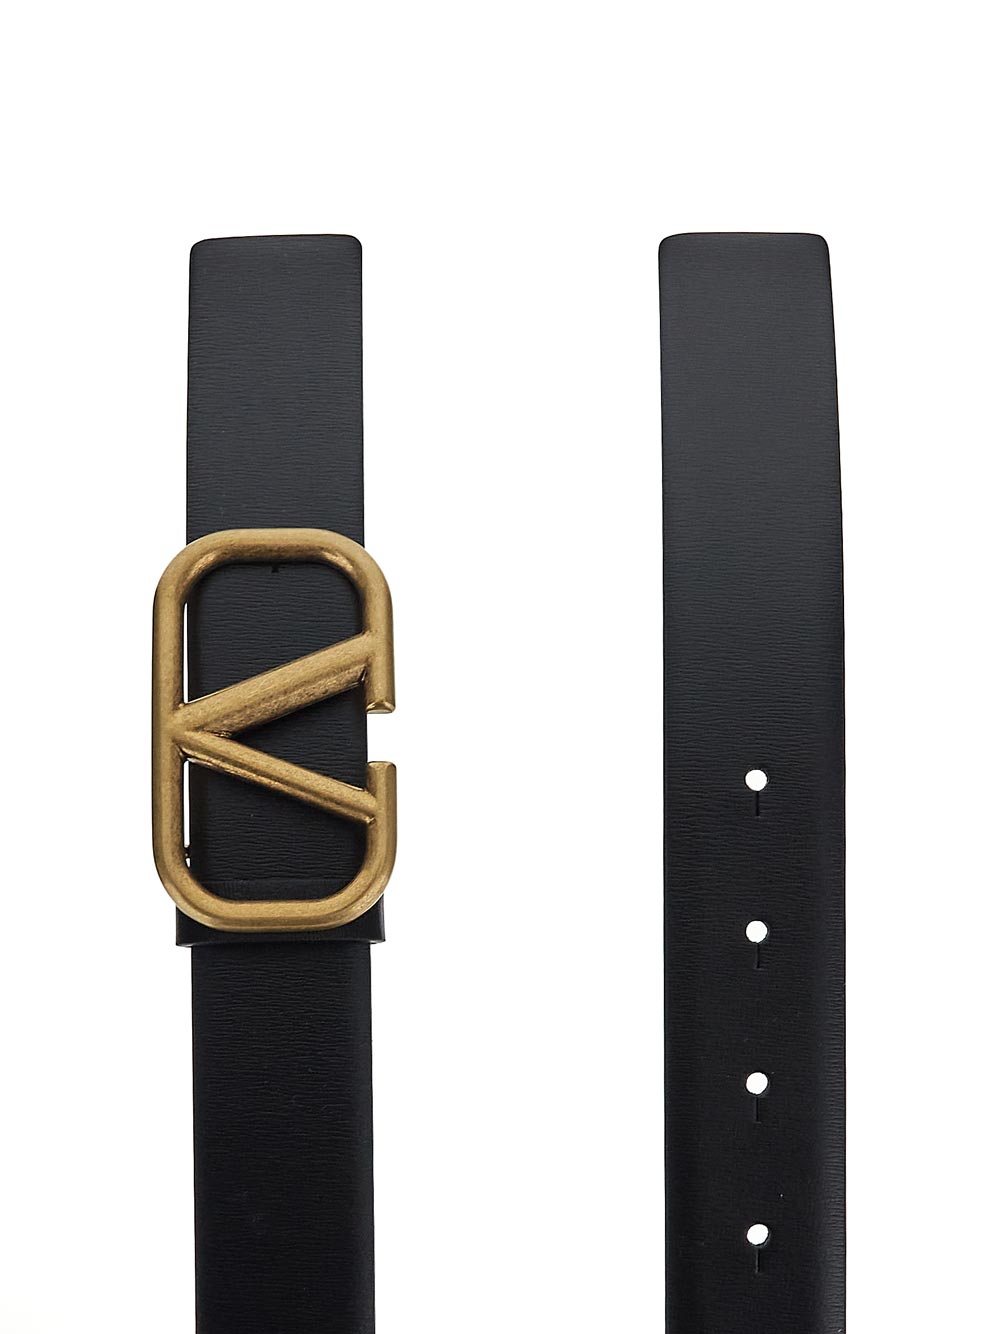 Valentino Garavani Vlogo Signature Leather Belt